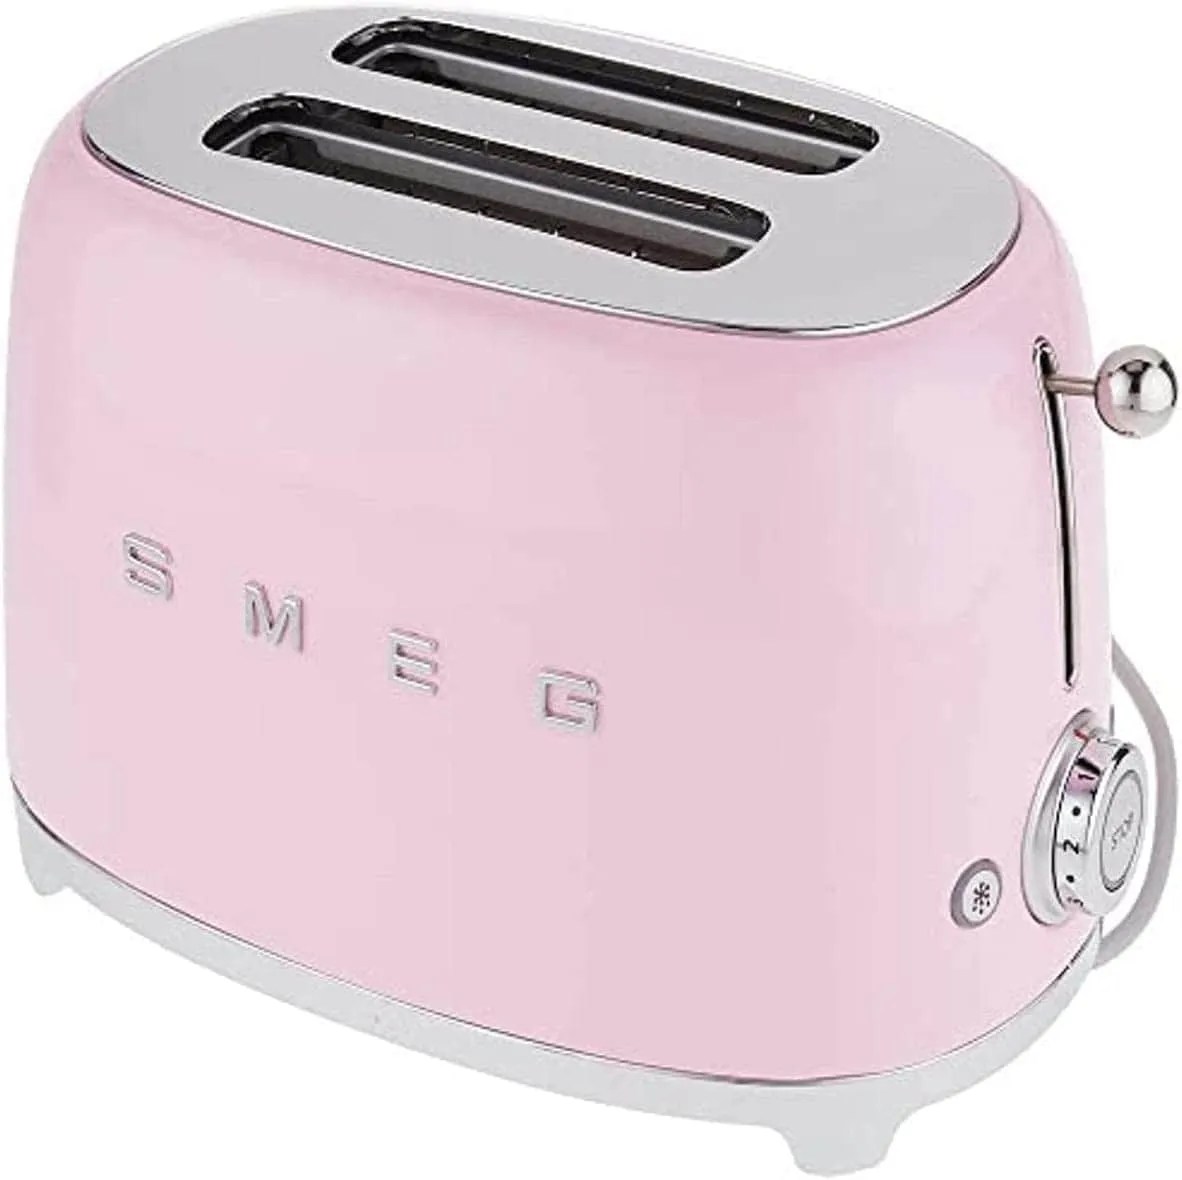 Pink Smeg 2 slice toaster